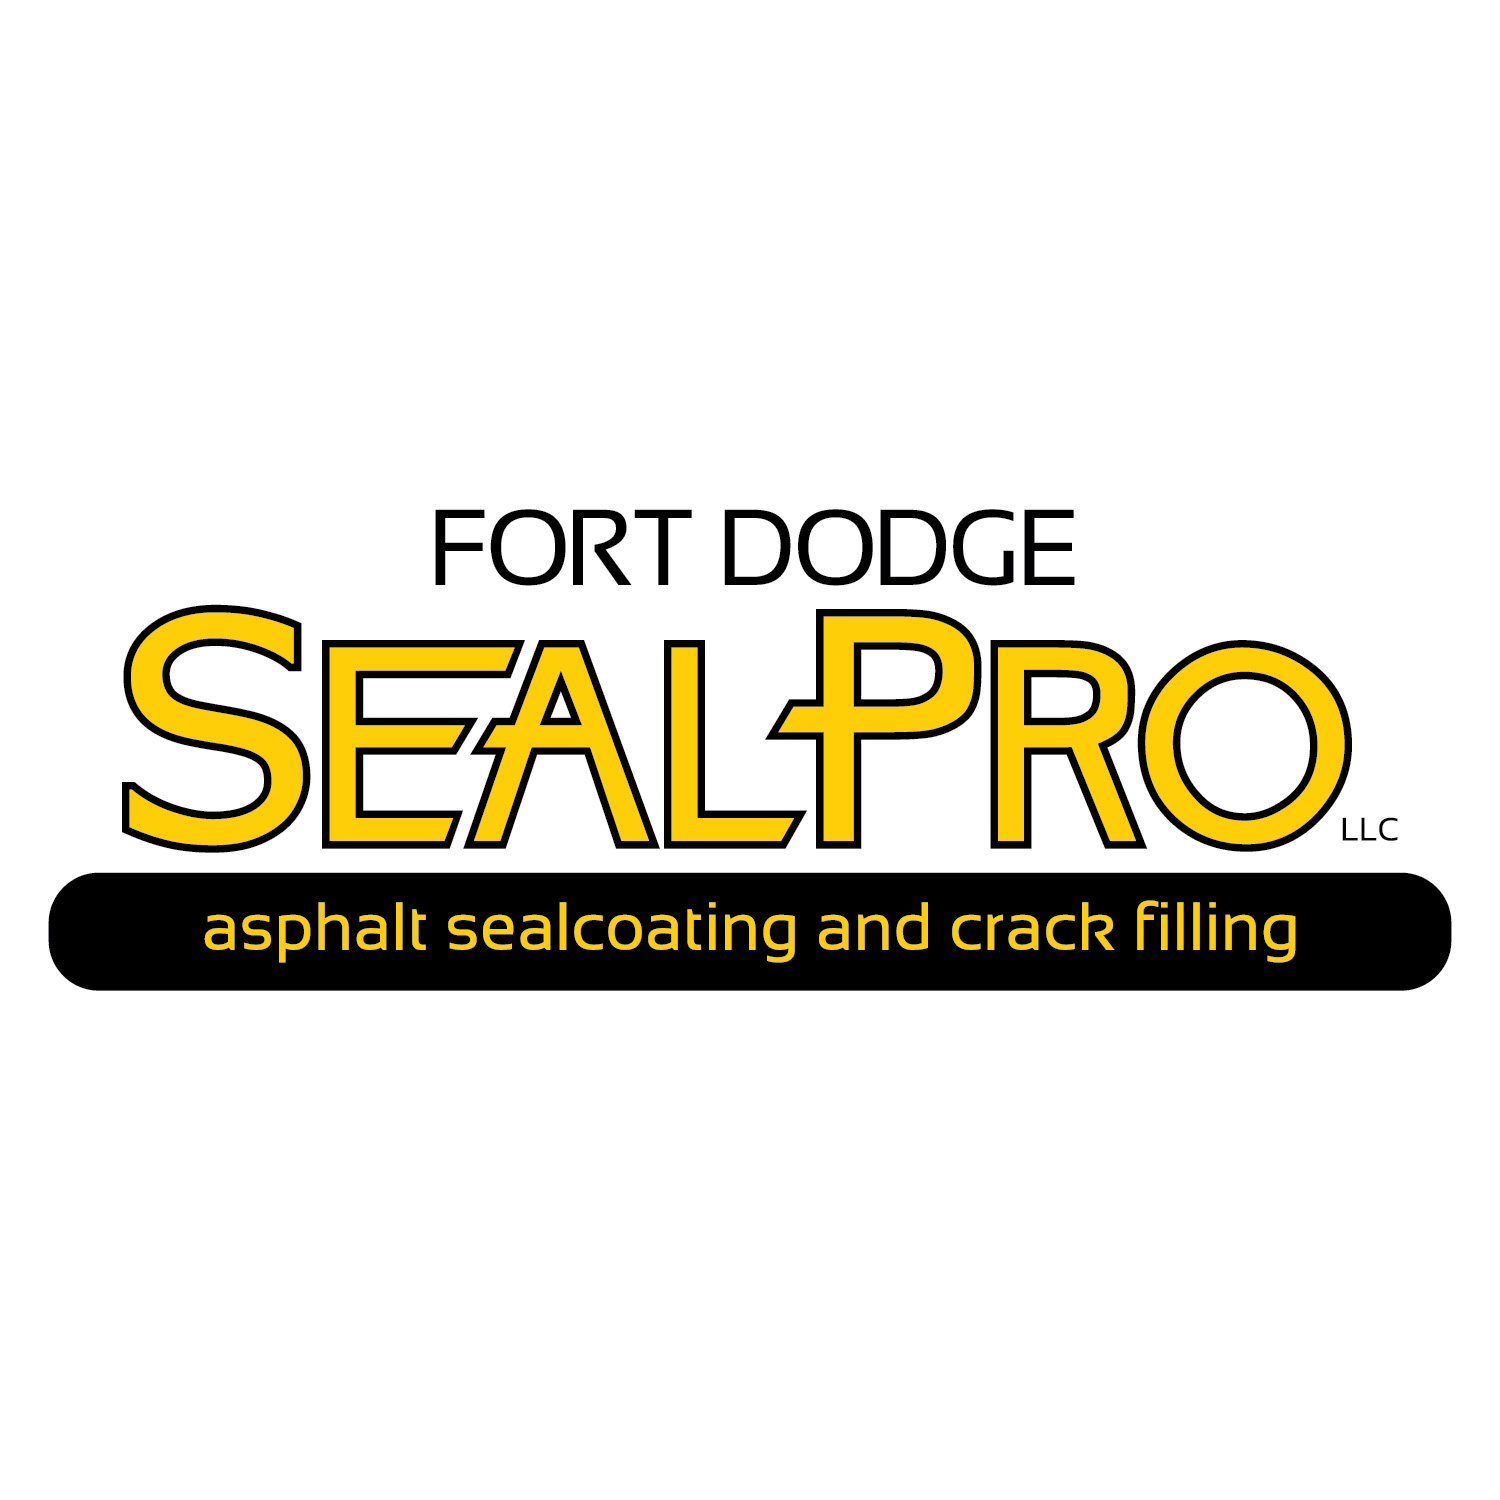 Fort Dodge SealPro's Image